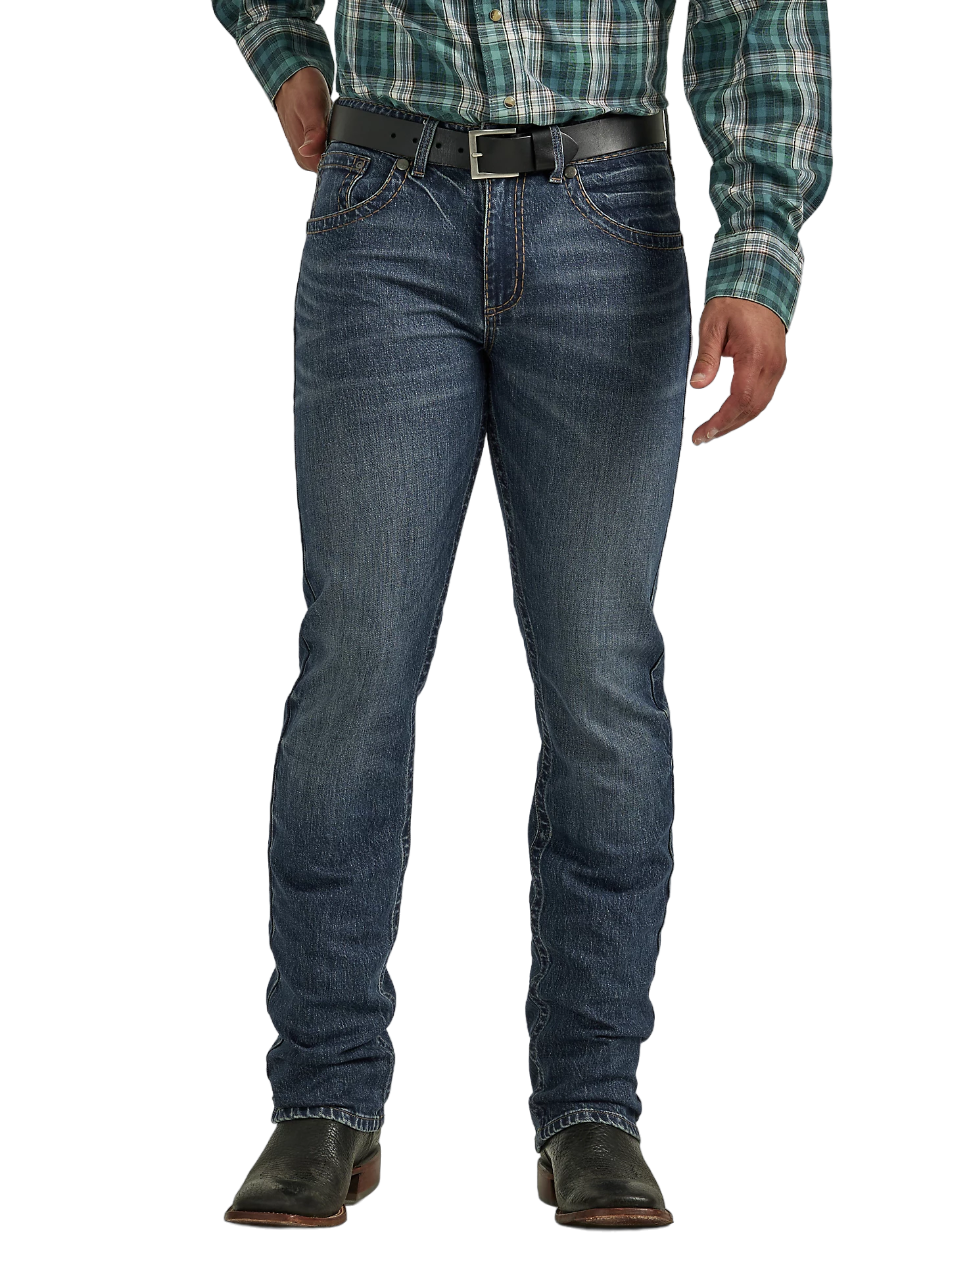 Stylish Wrangler Men's Rock Slim Straight Jeans - Quality Western Bottoms